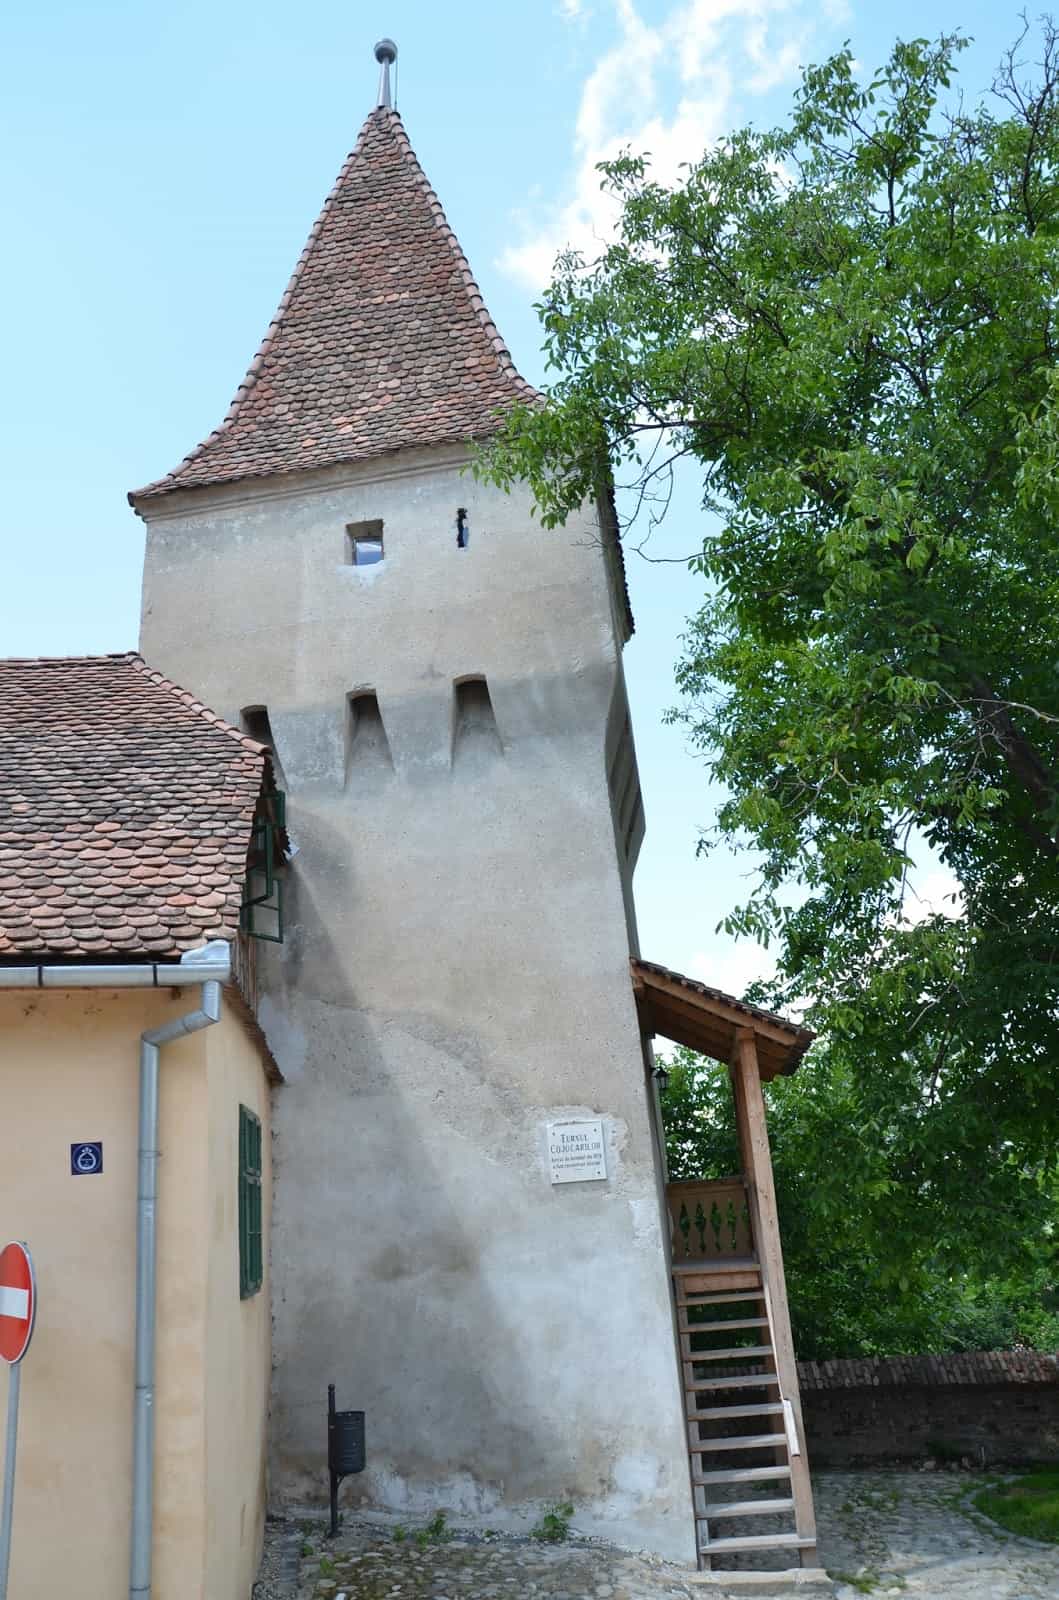 Furrier’s Tower in Sighişoara, Romania